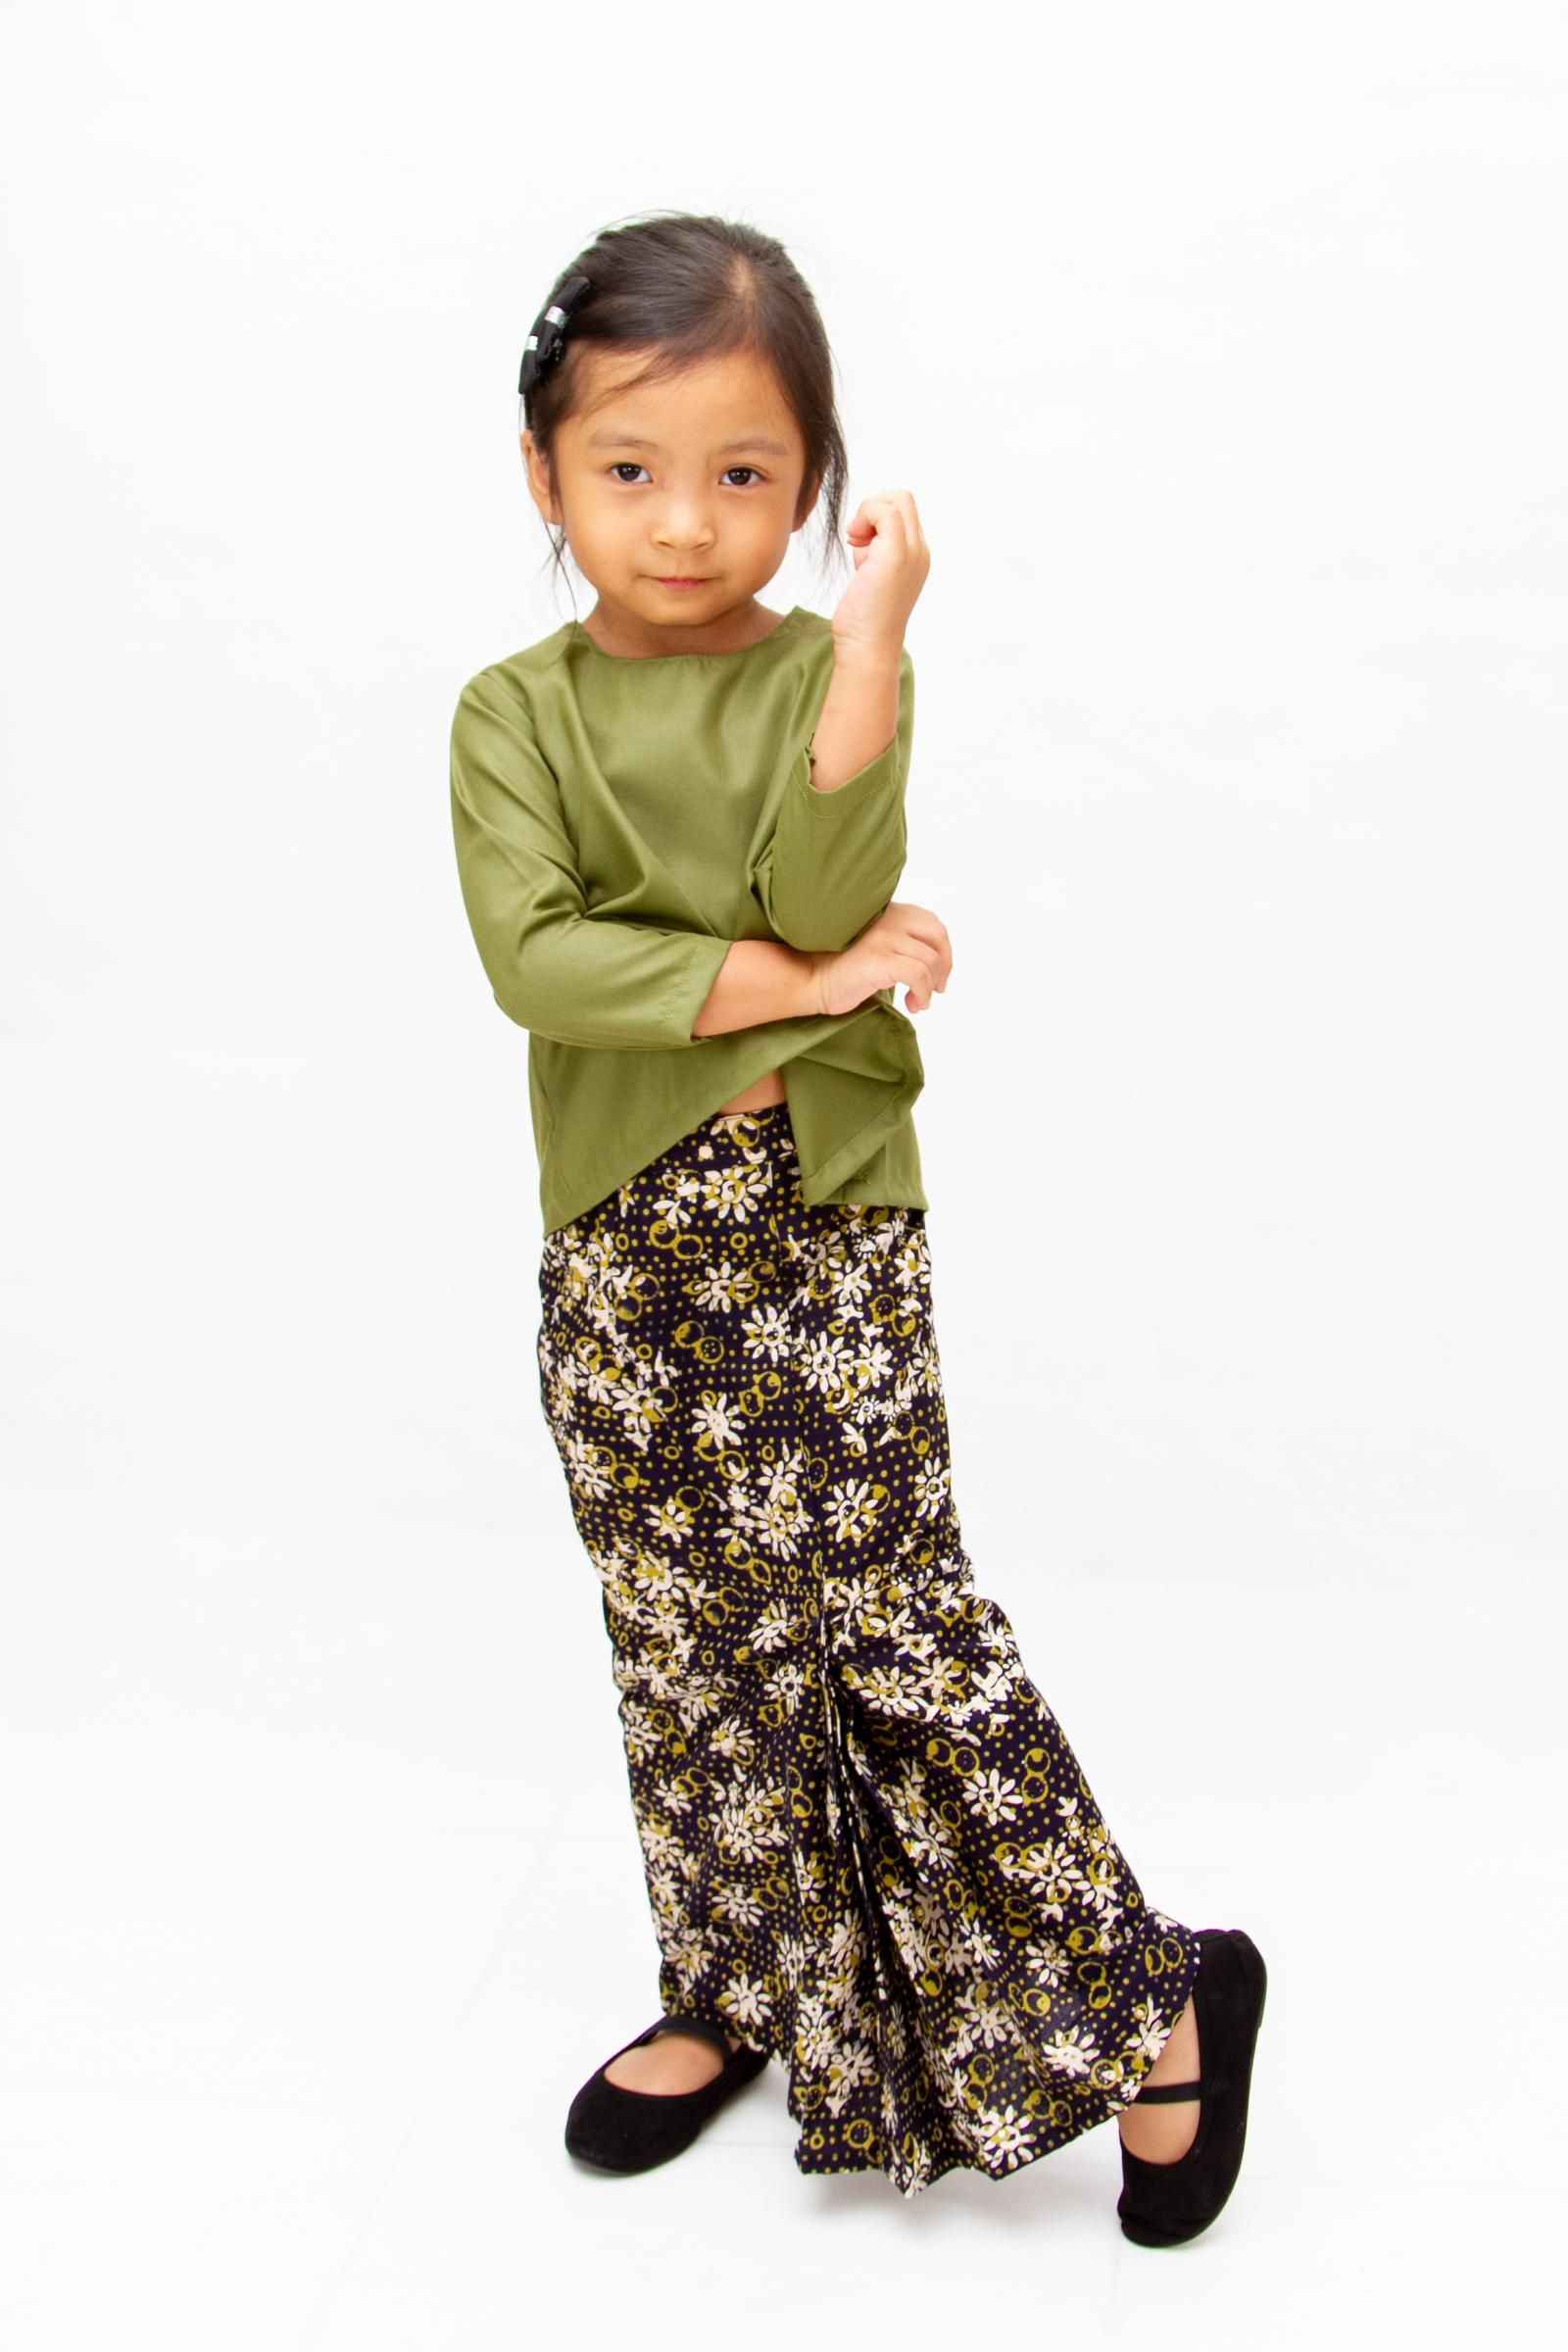 Eloque Batik Kipas Girls Skirt 9737 - 4 Sizes  (Black /Green)